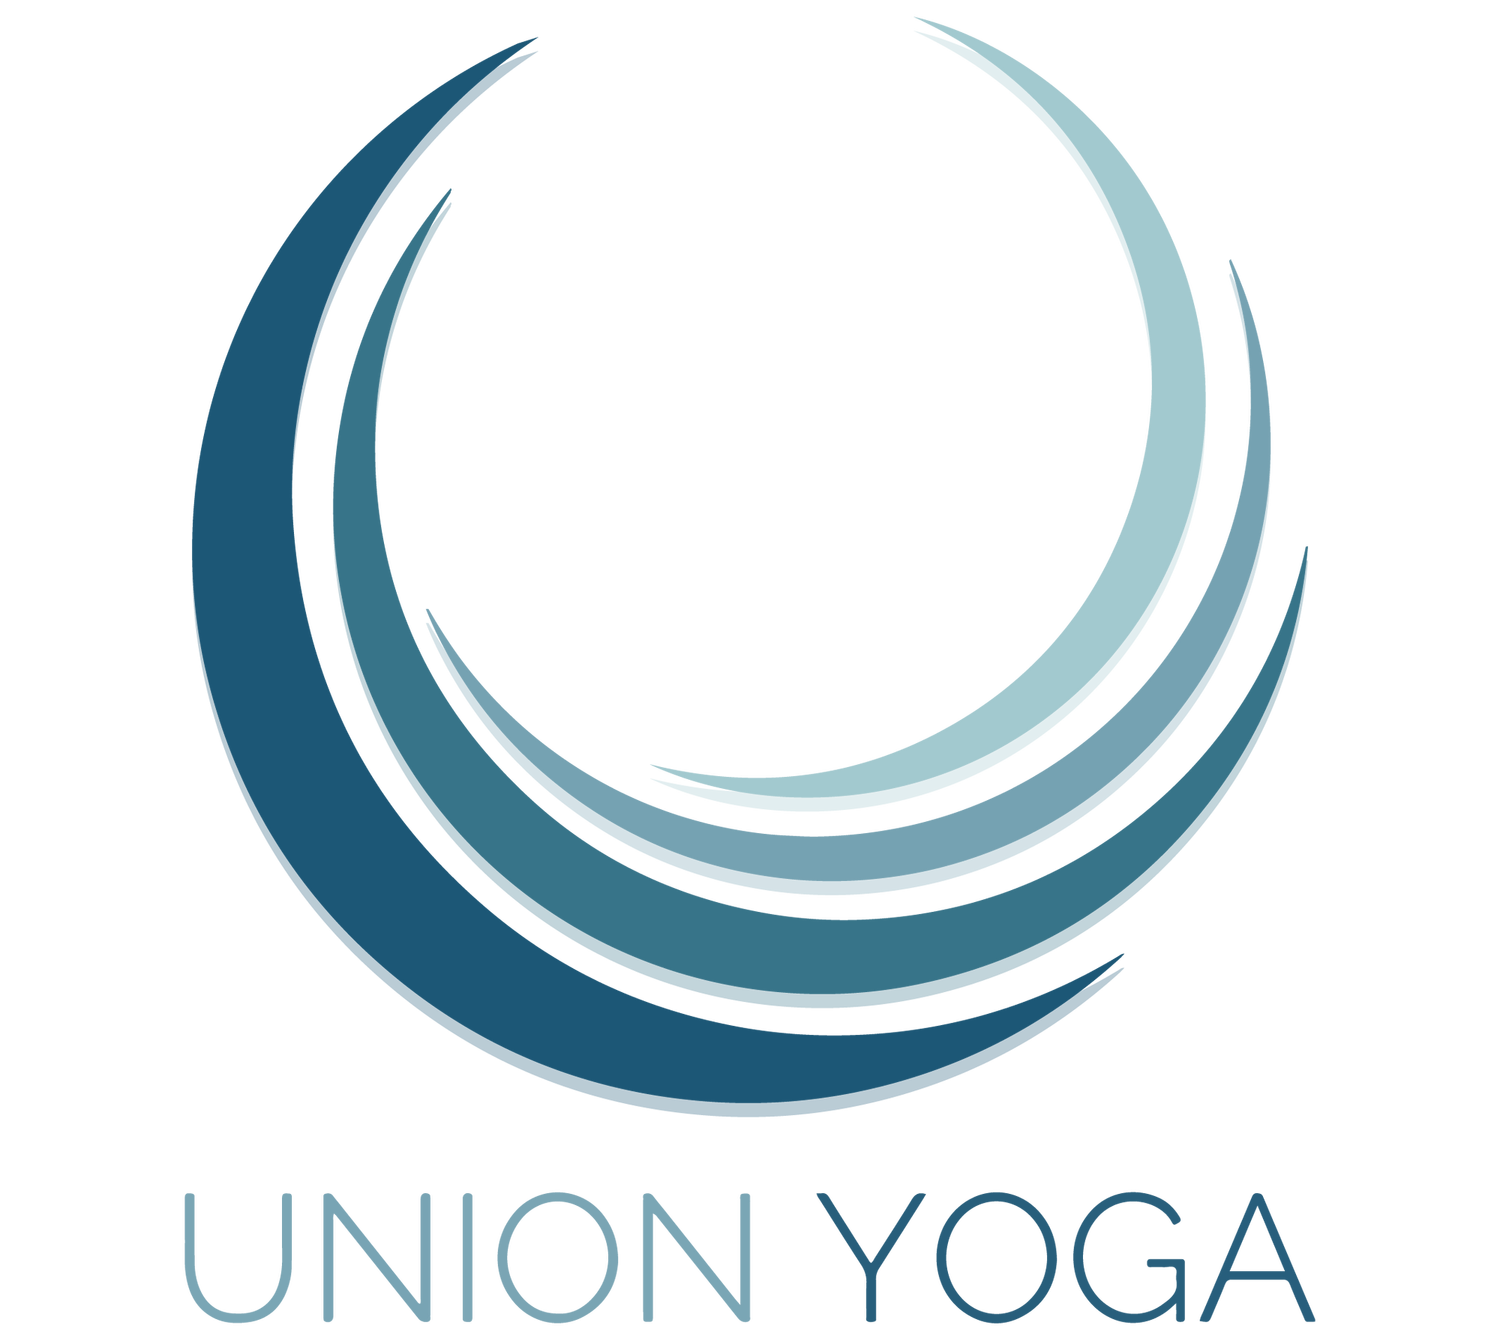 Union Yoga SD | San Diego based yoga studio 